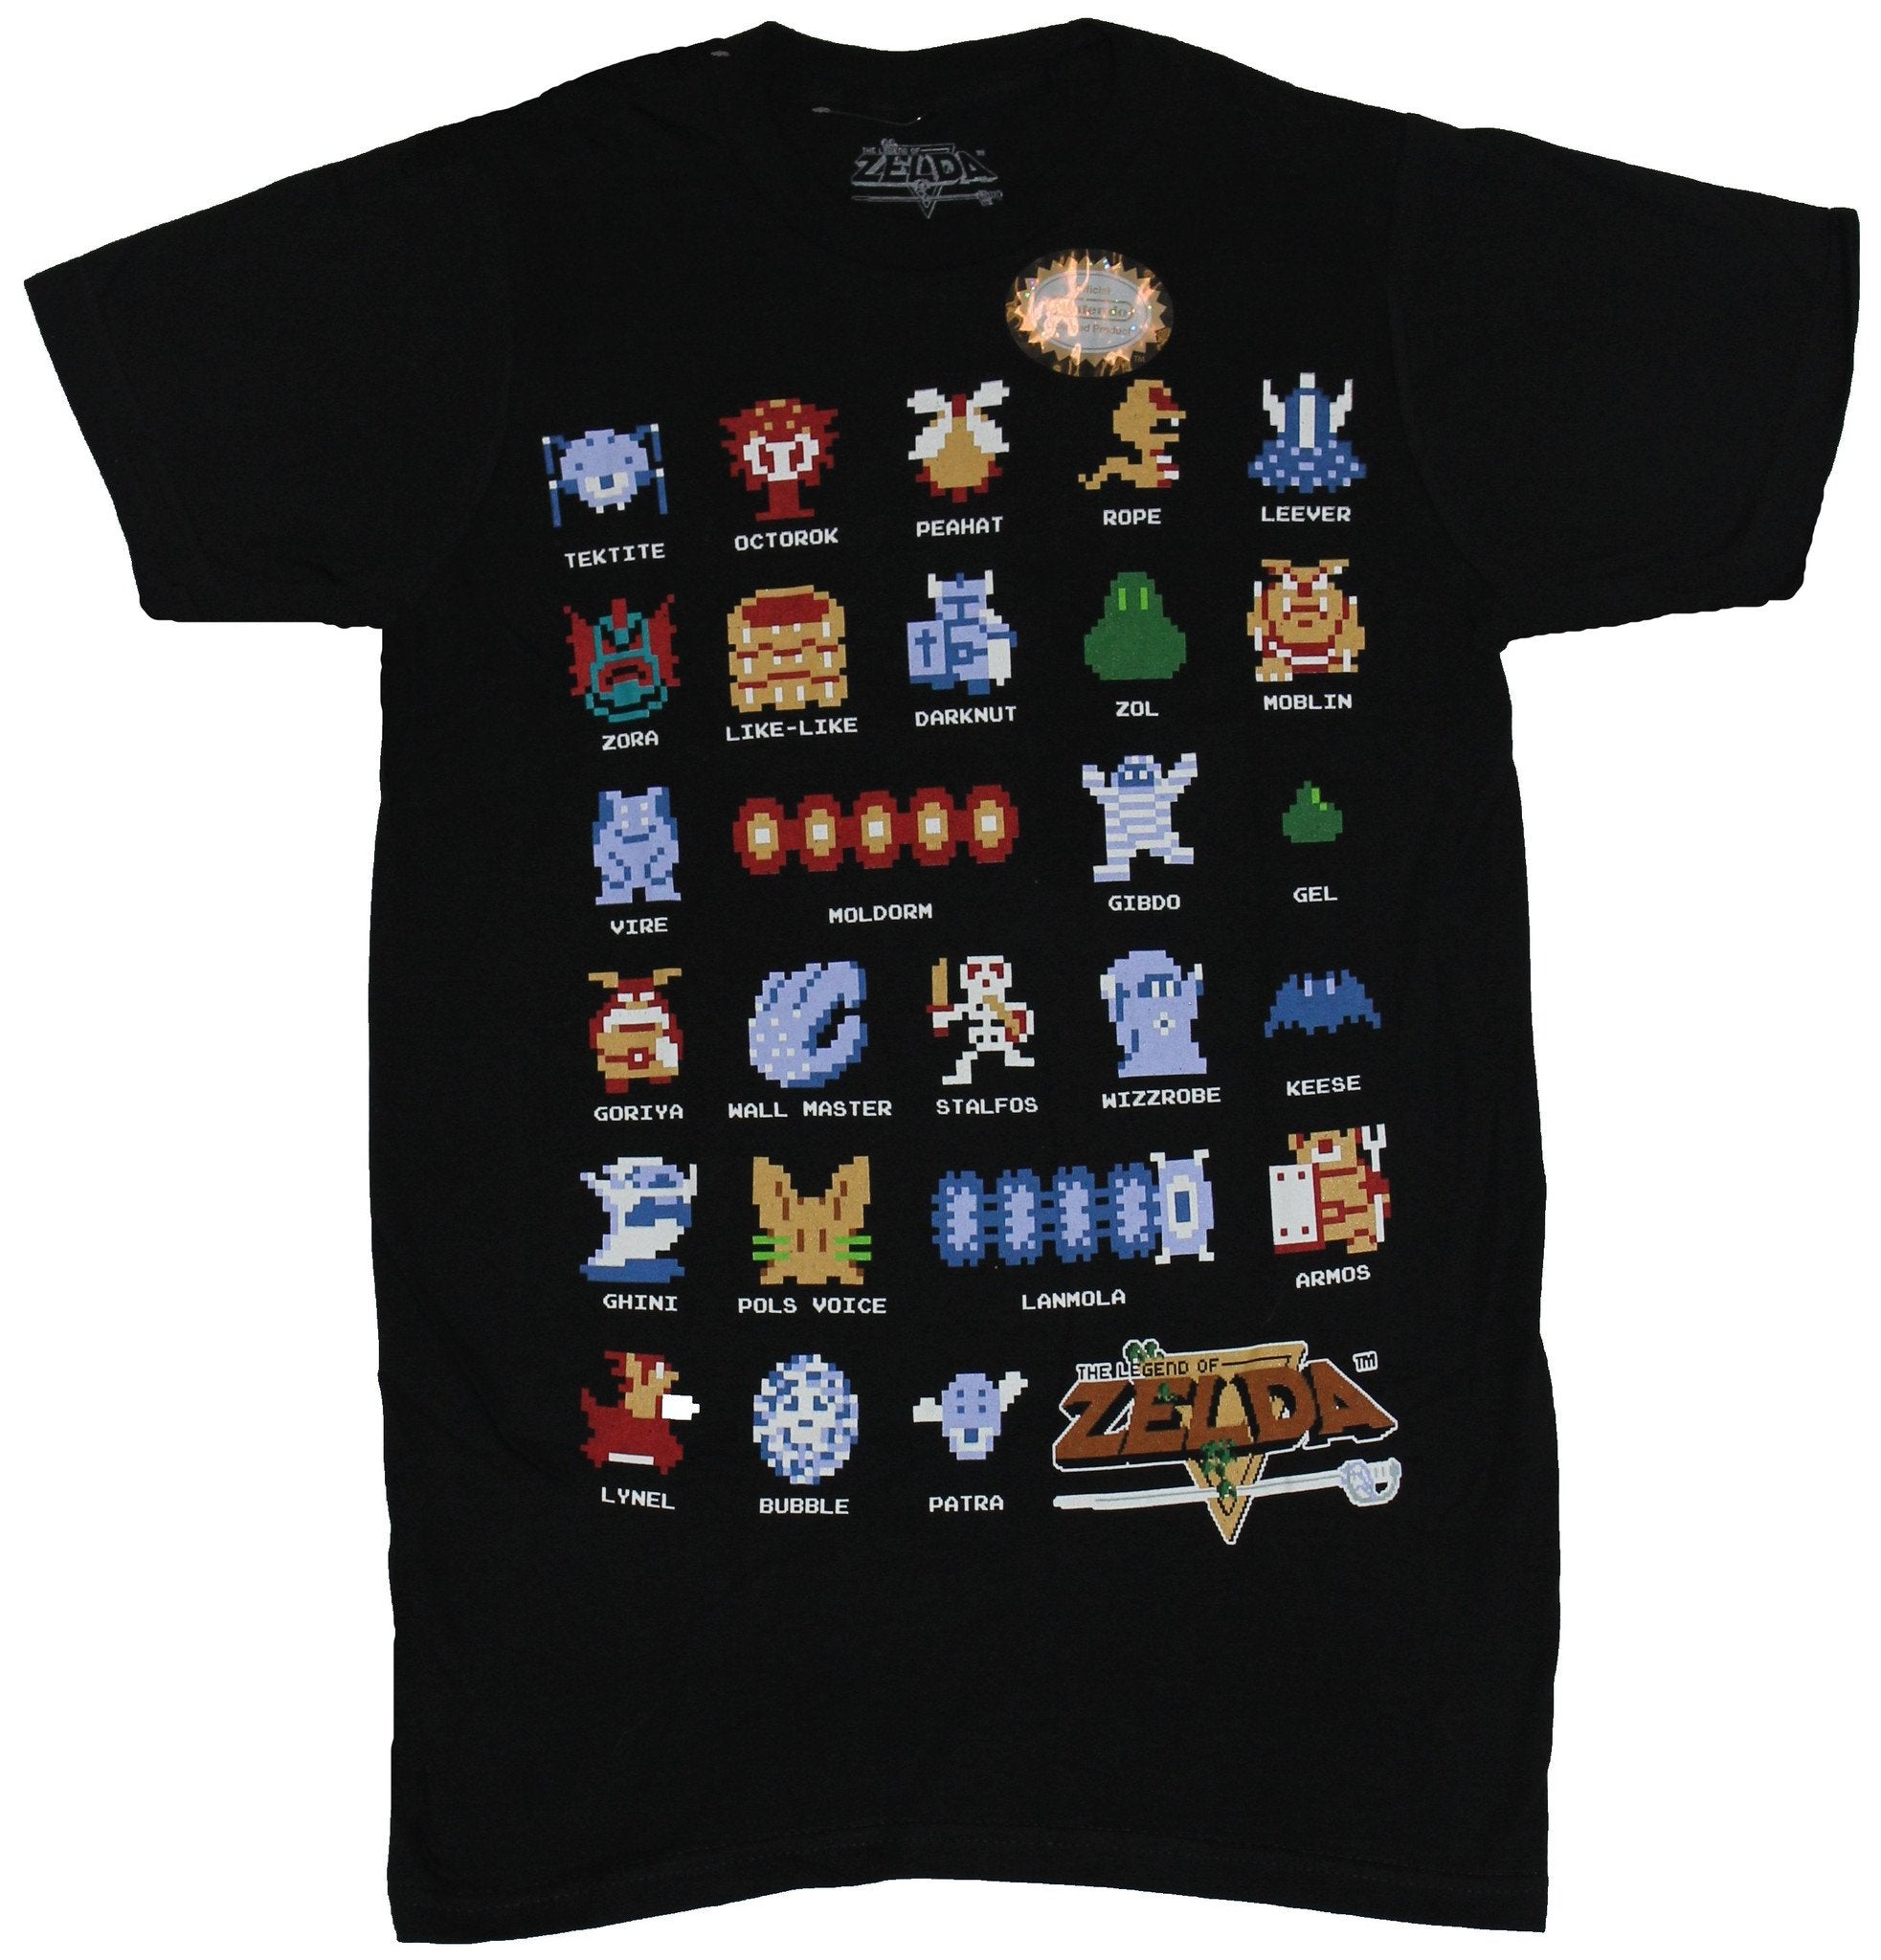 Legend of Zelda Mens T-Shirt - Know Your Foe 8-Bit Enemies Defined Image